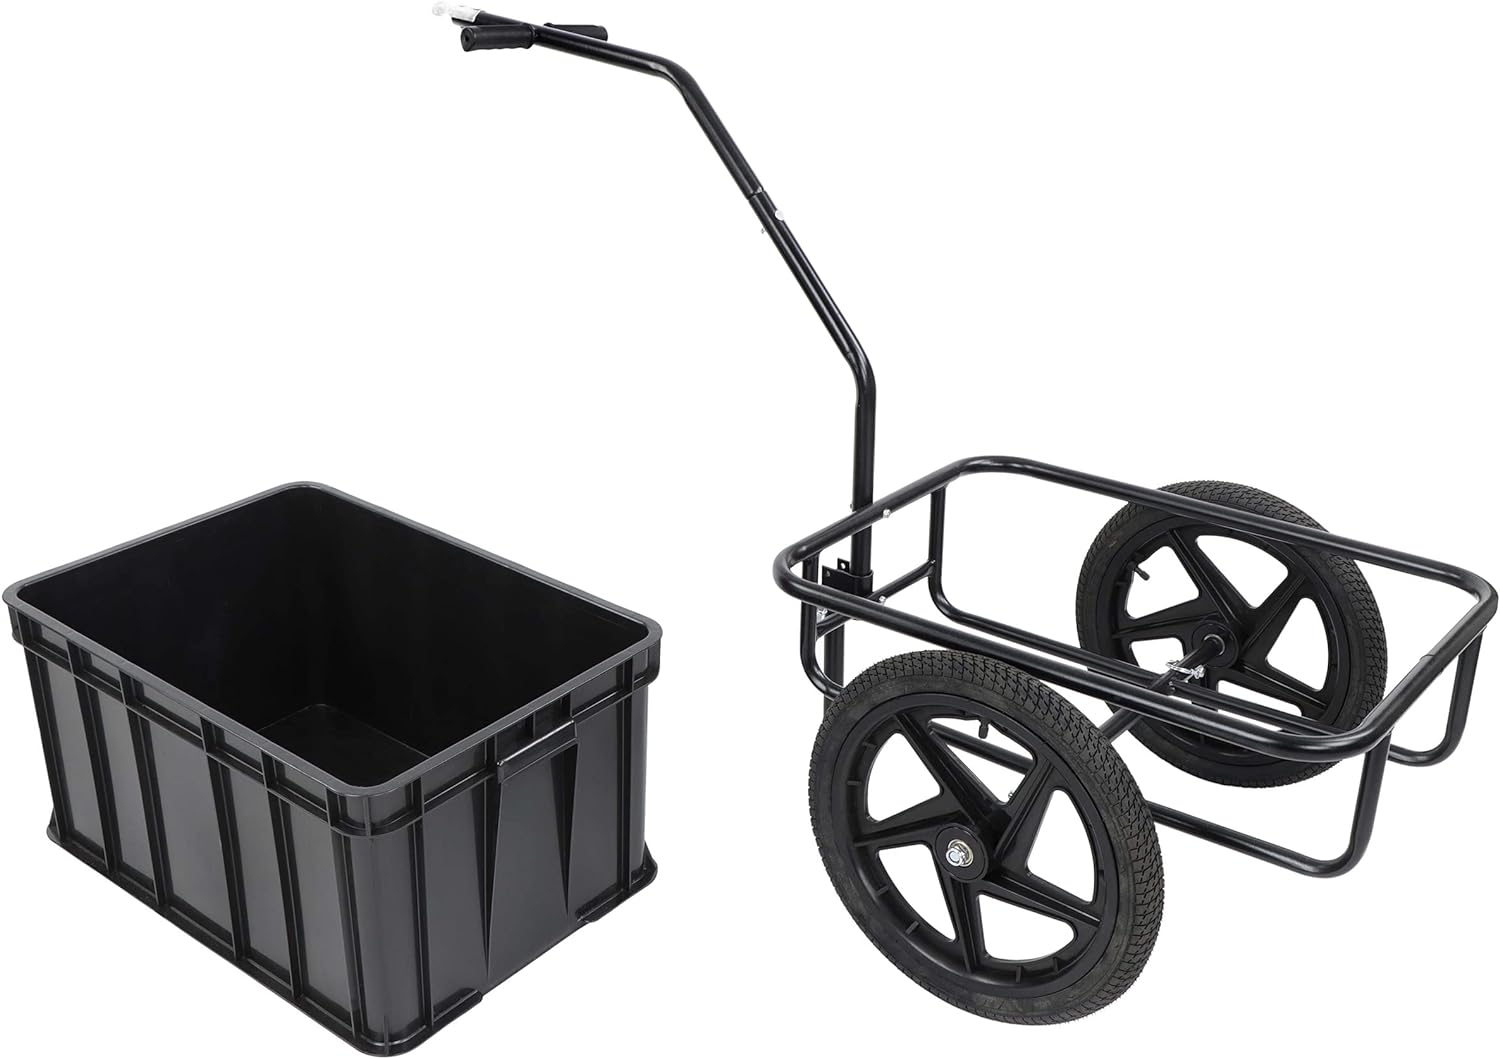 Neature Bike Trailer Utility Cart and Bike Trailer Attachment Kit - 88lb Capacity Towable Bike Cargo Wagon for Travel